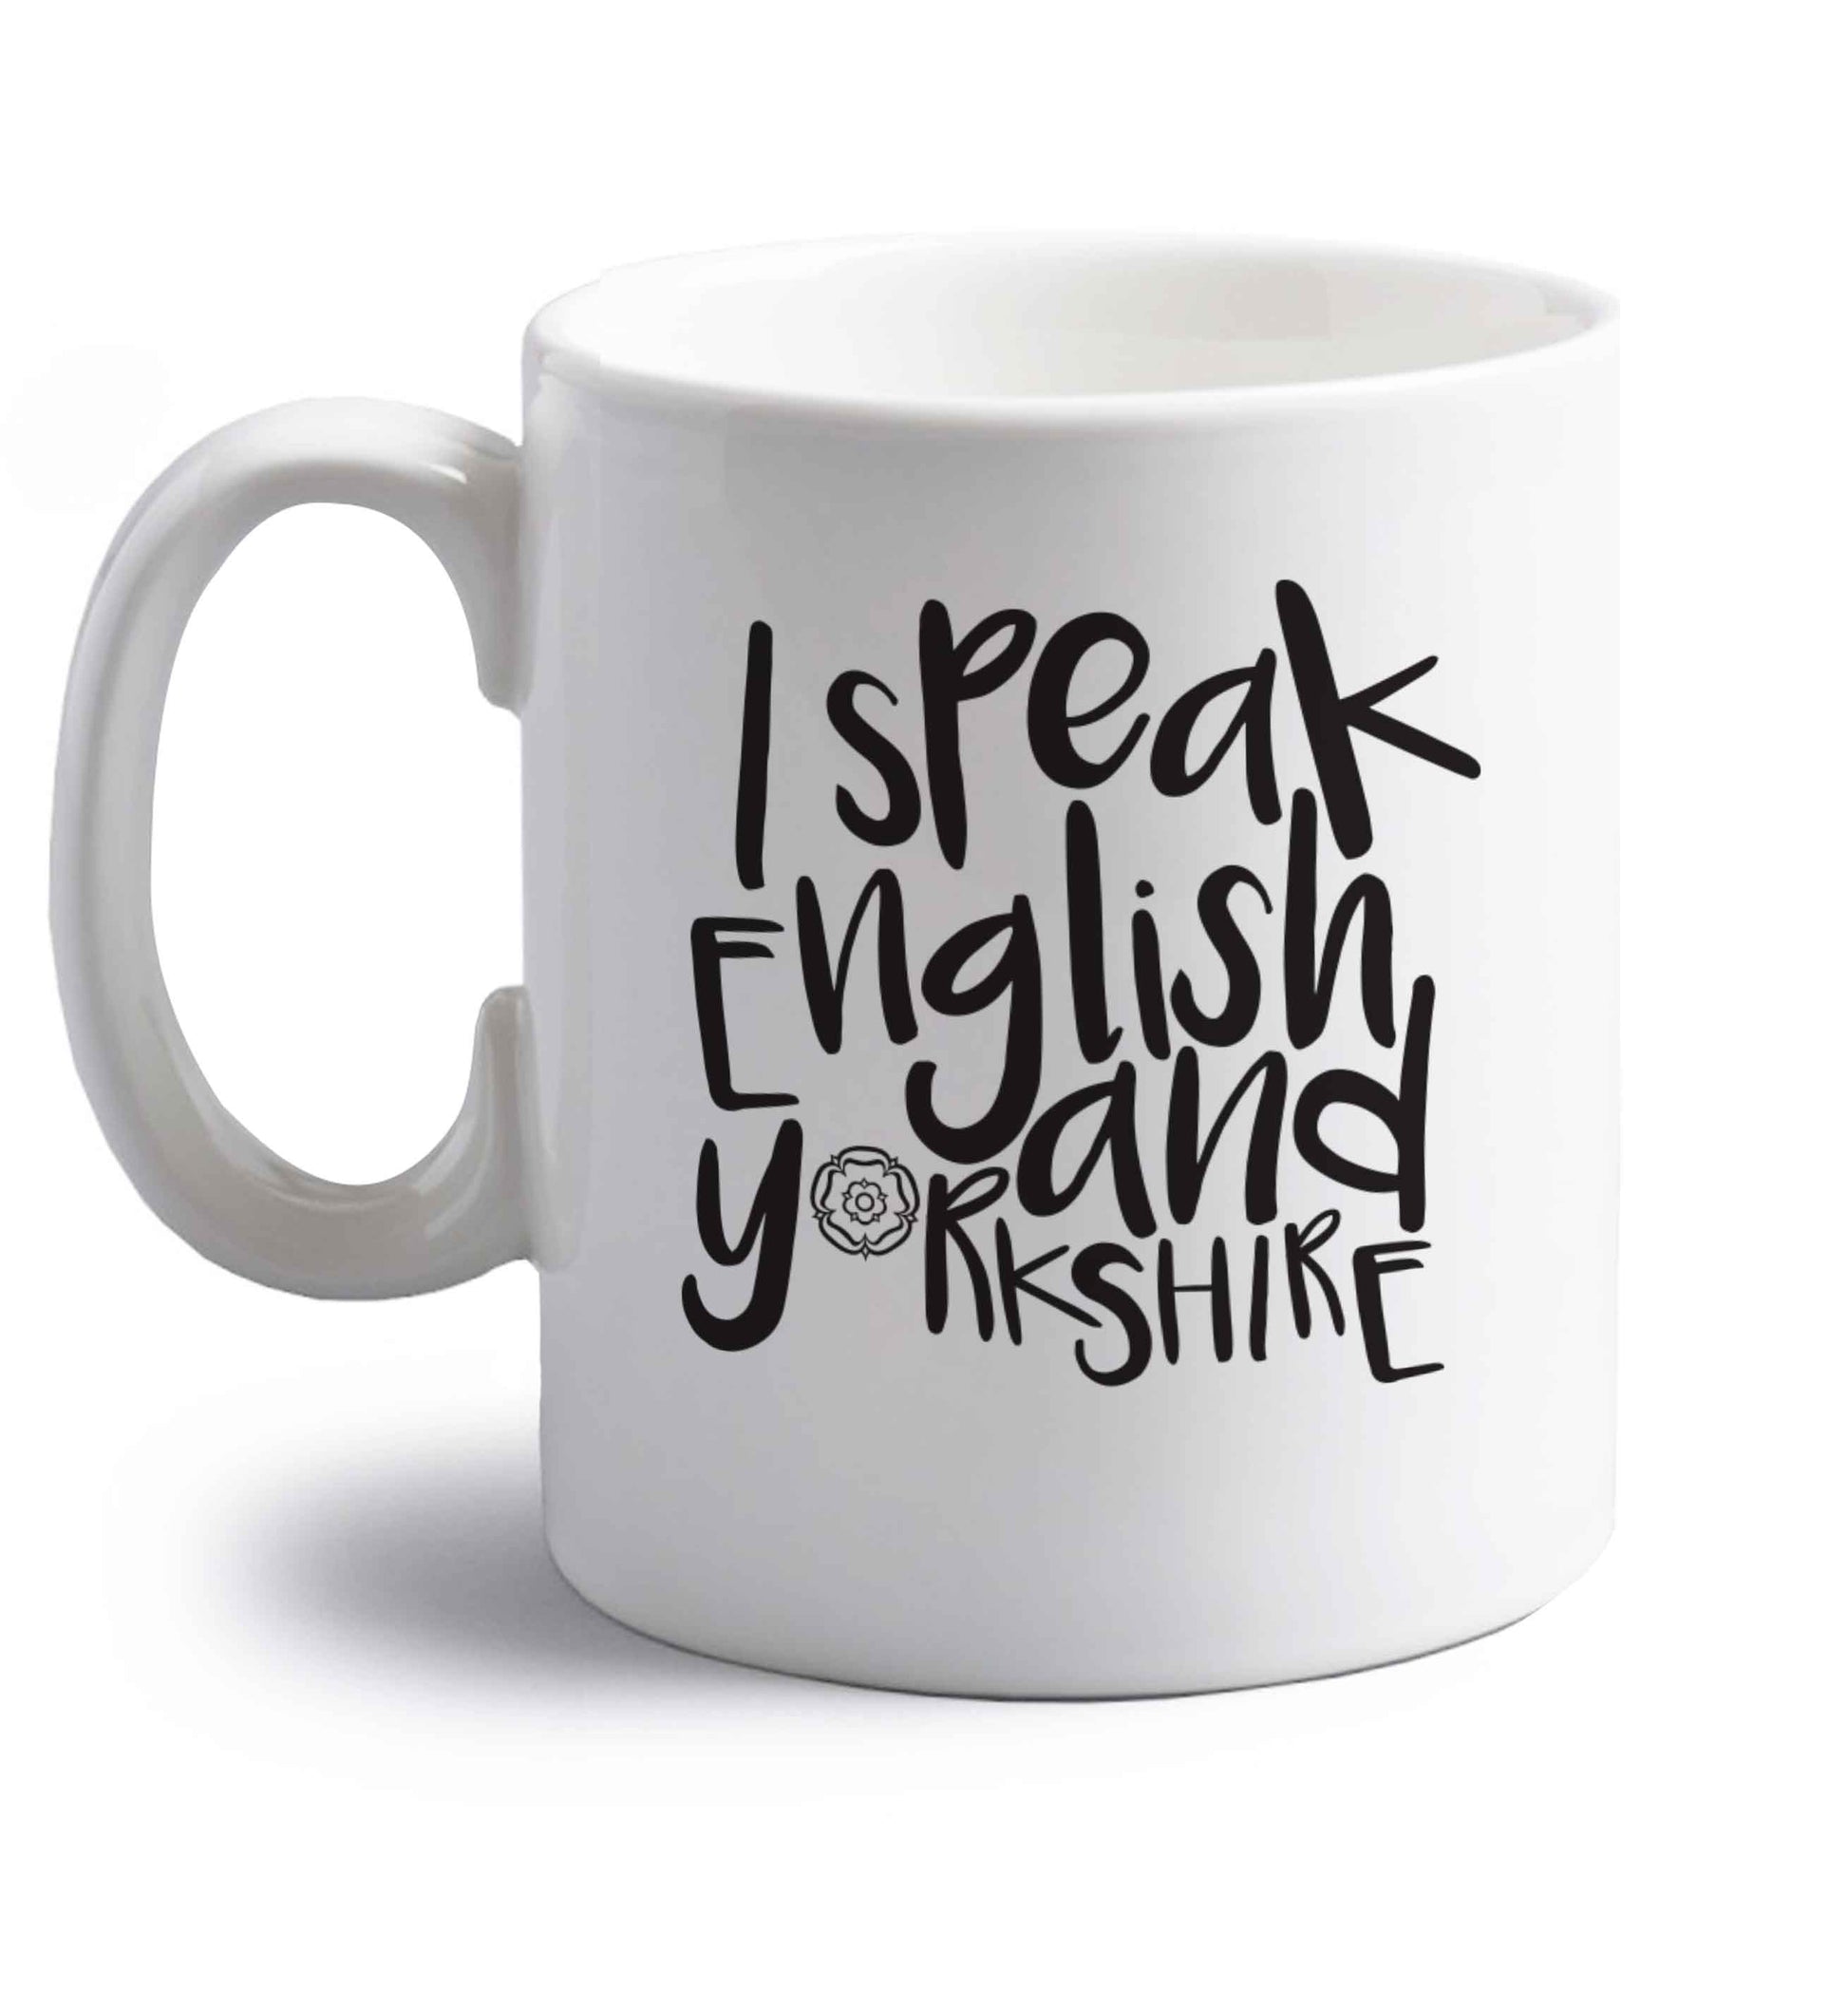 I speak English and Yorkshire right handed white ceramic mug 